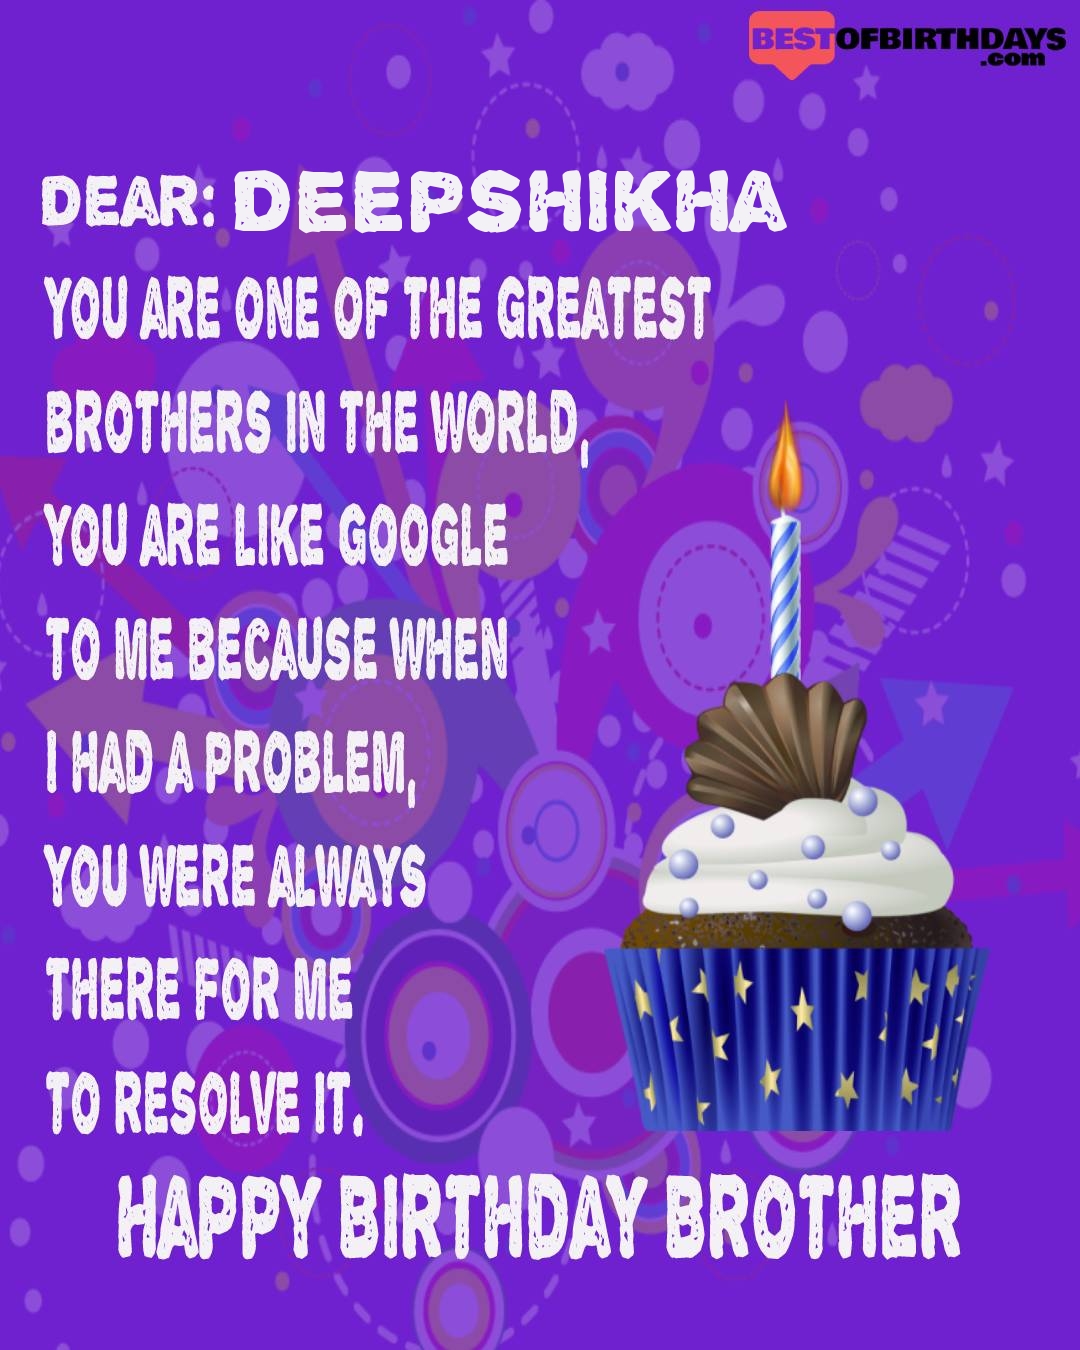 Happy birthday deepshikha bhai brother bro